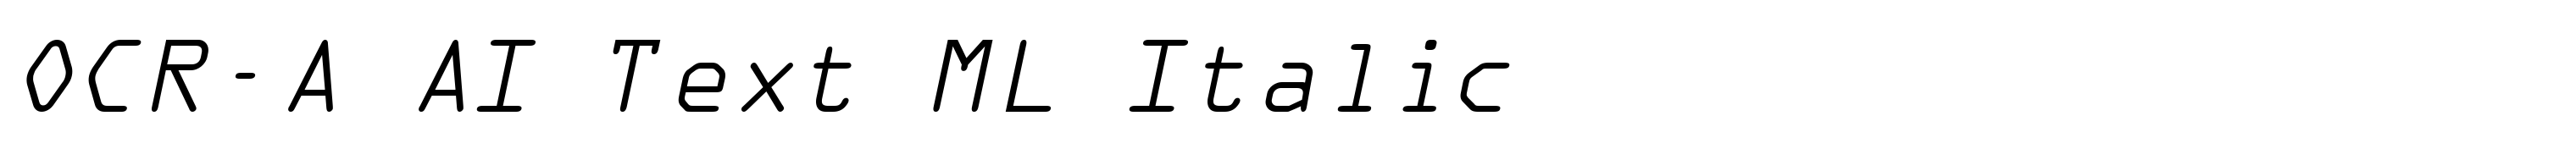 OCR-A AI Text ML Italic